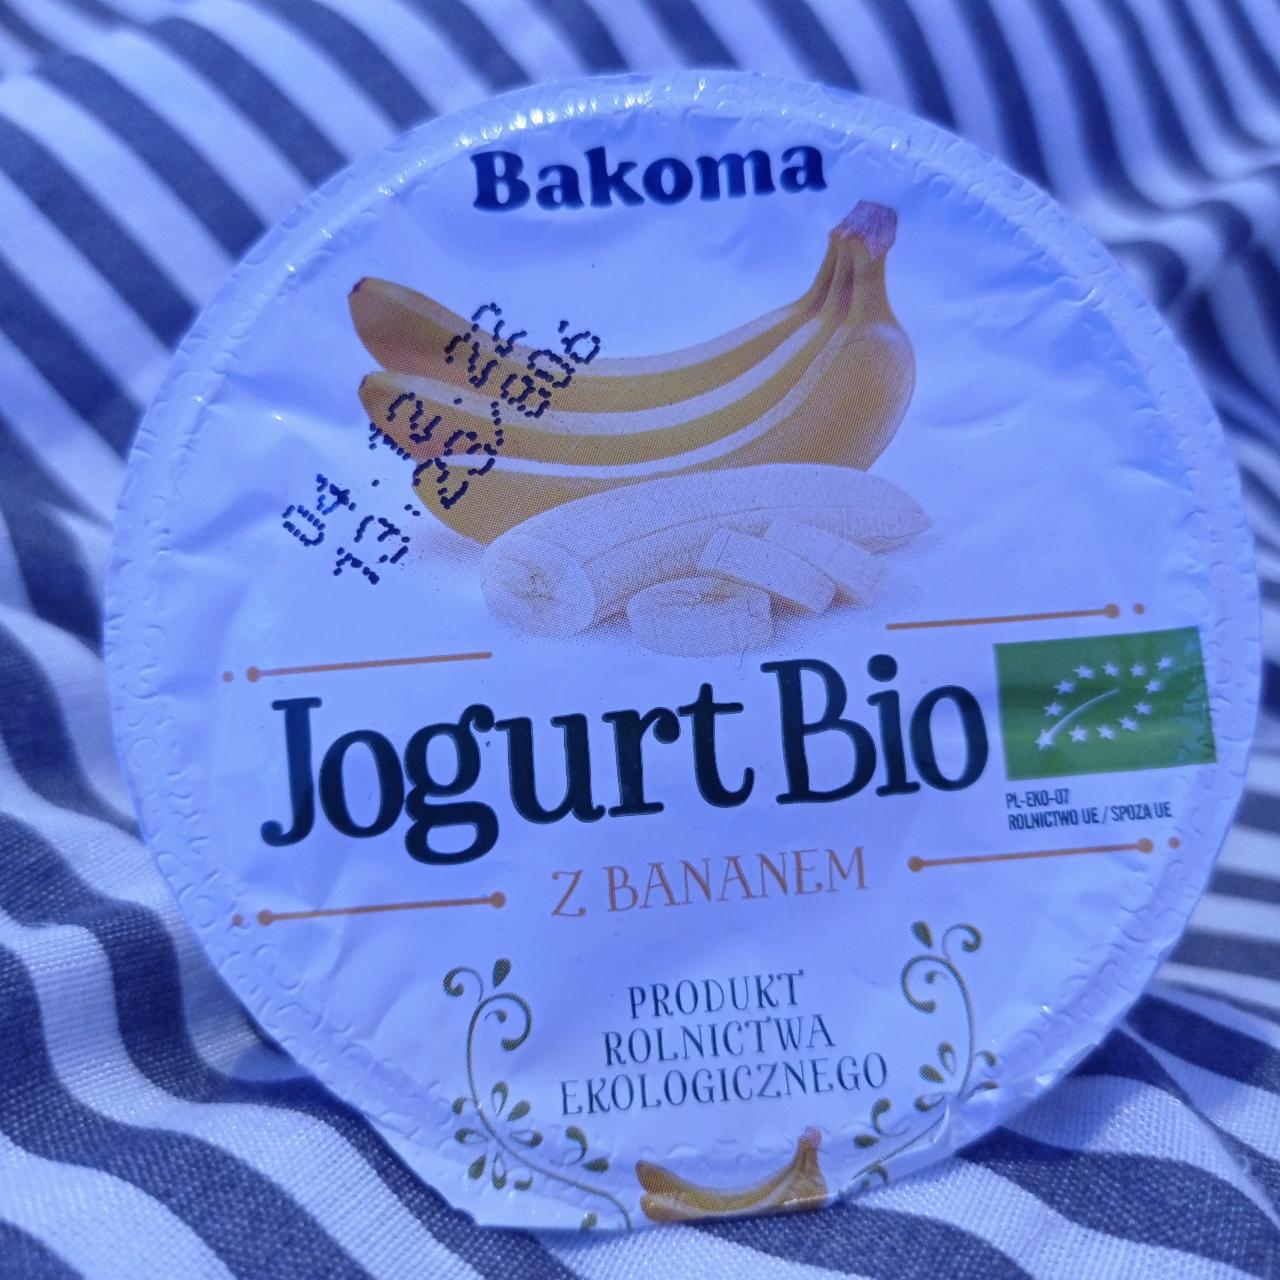 Zdjęcia - Jogurt Bio z bananem Bakoma